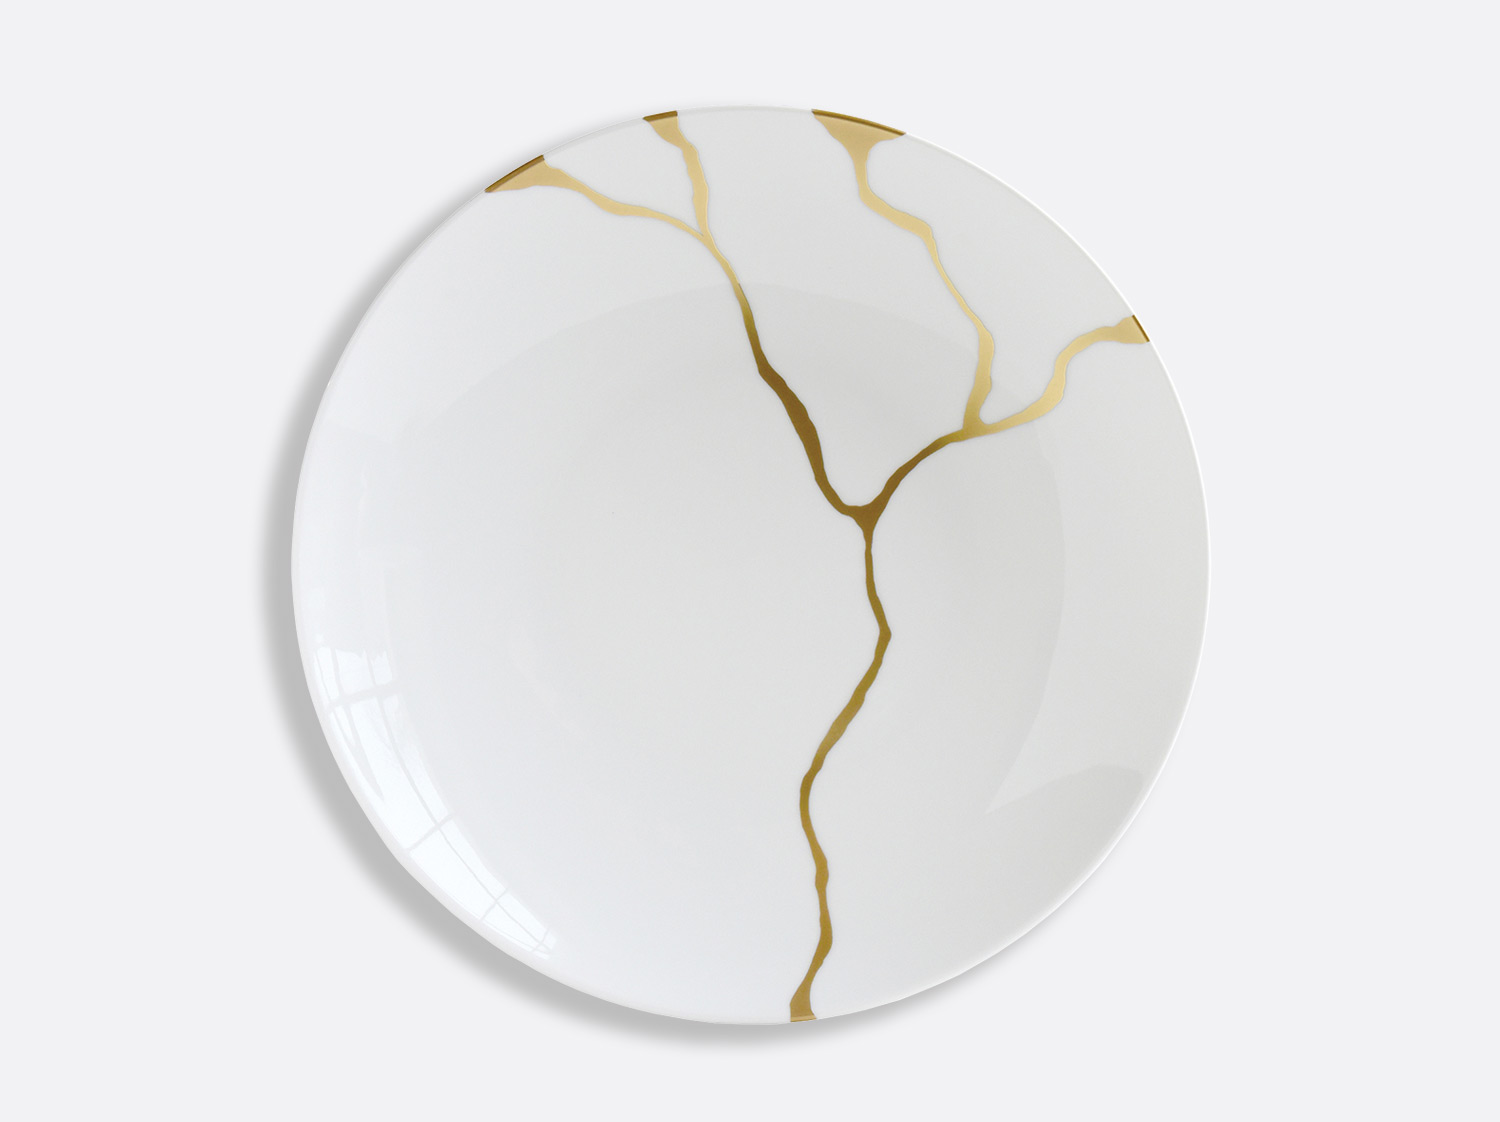 China Deep round dish 29 cm of the collection Kintsugi | Bernardaud